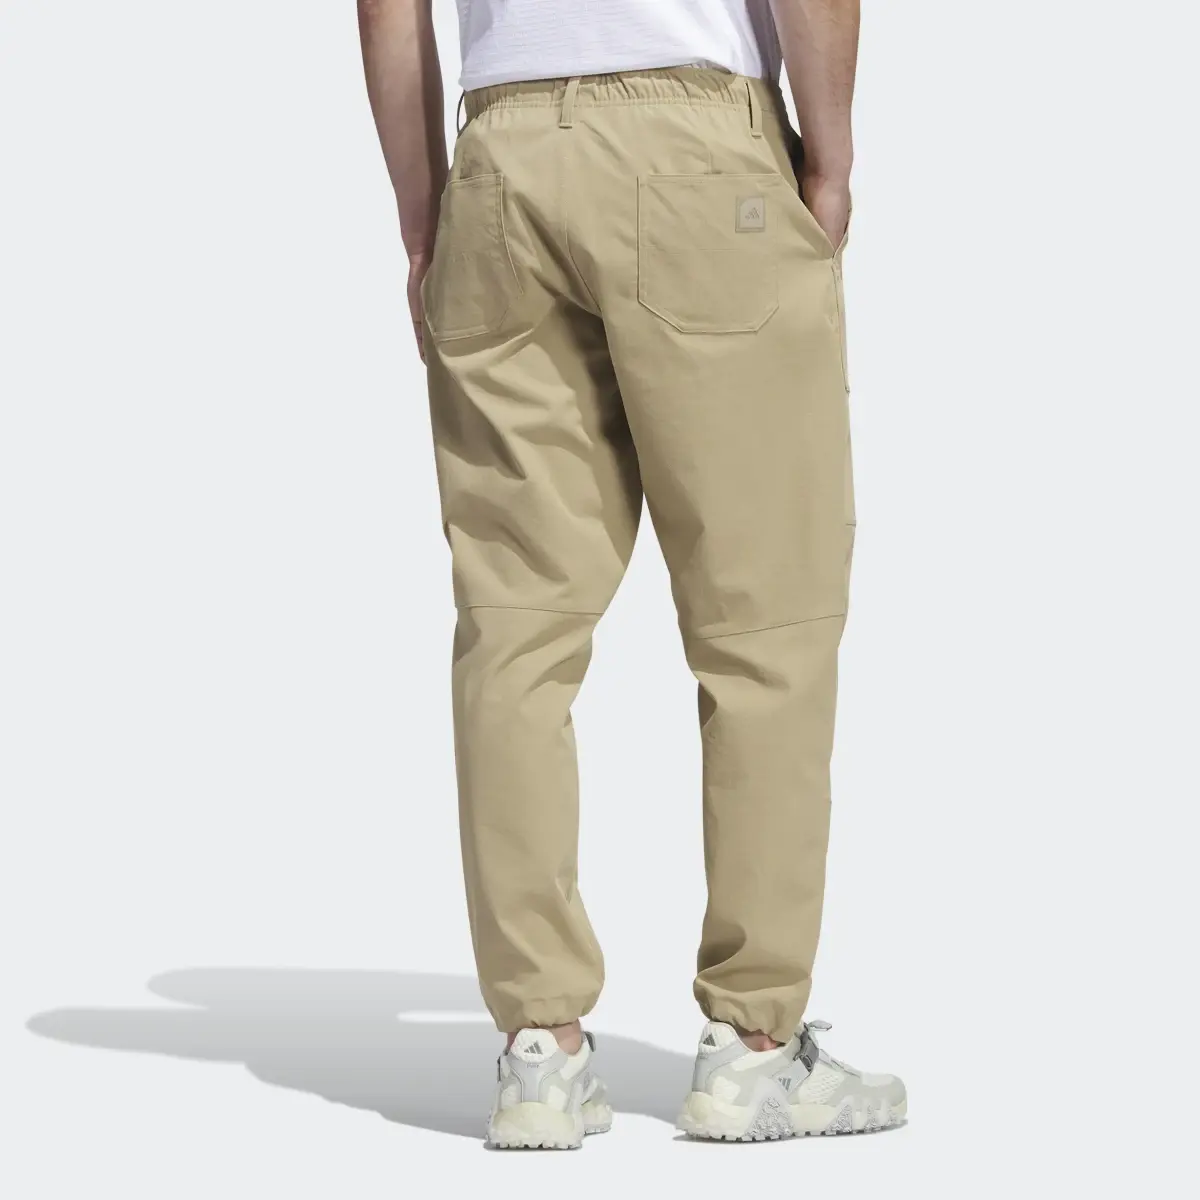 Adidas Adicross Golf Trousers. 2